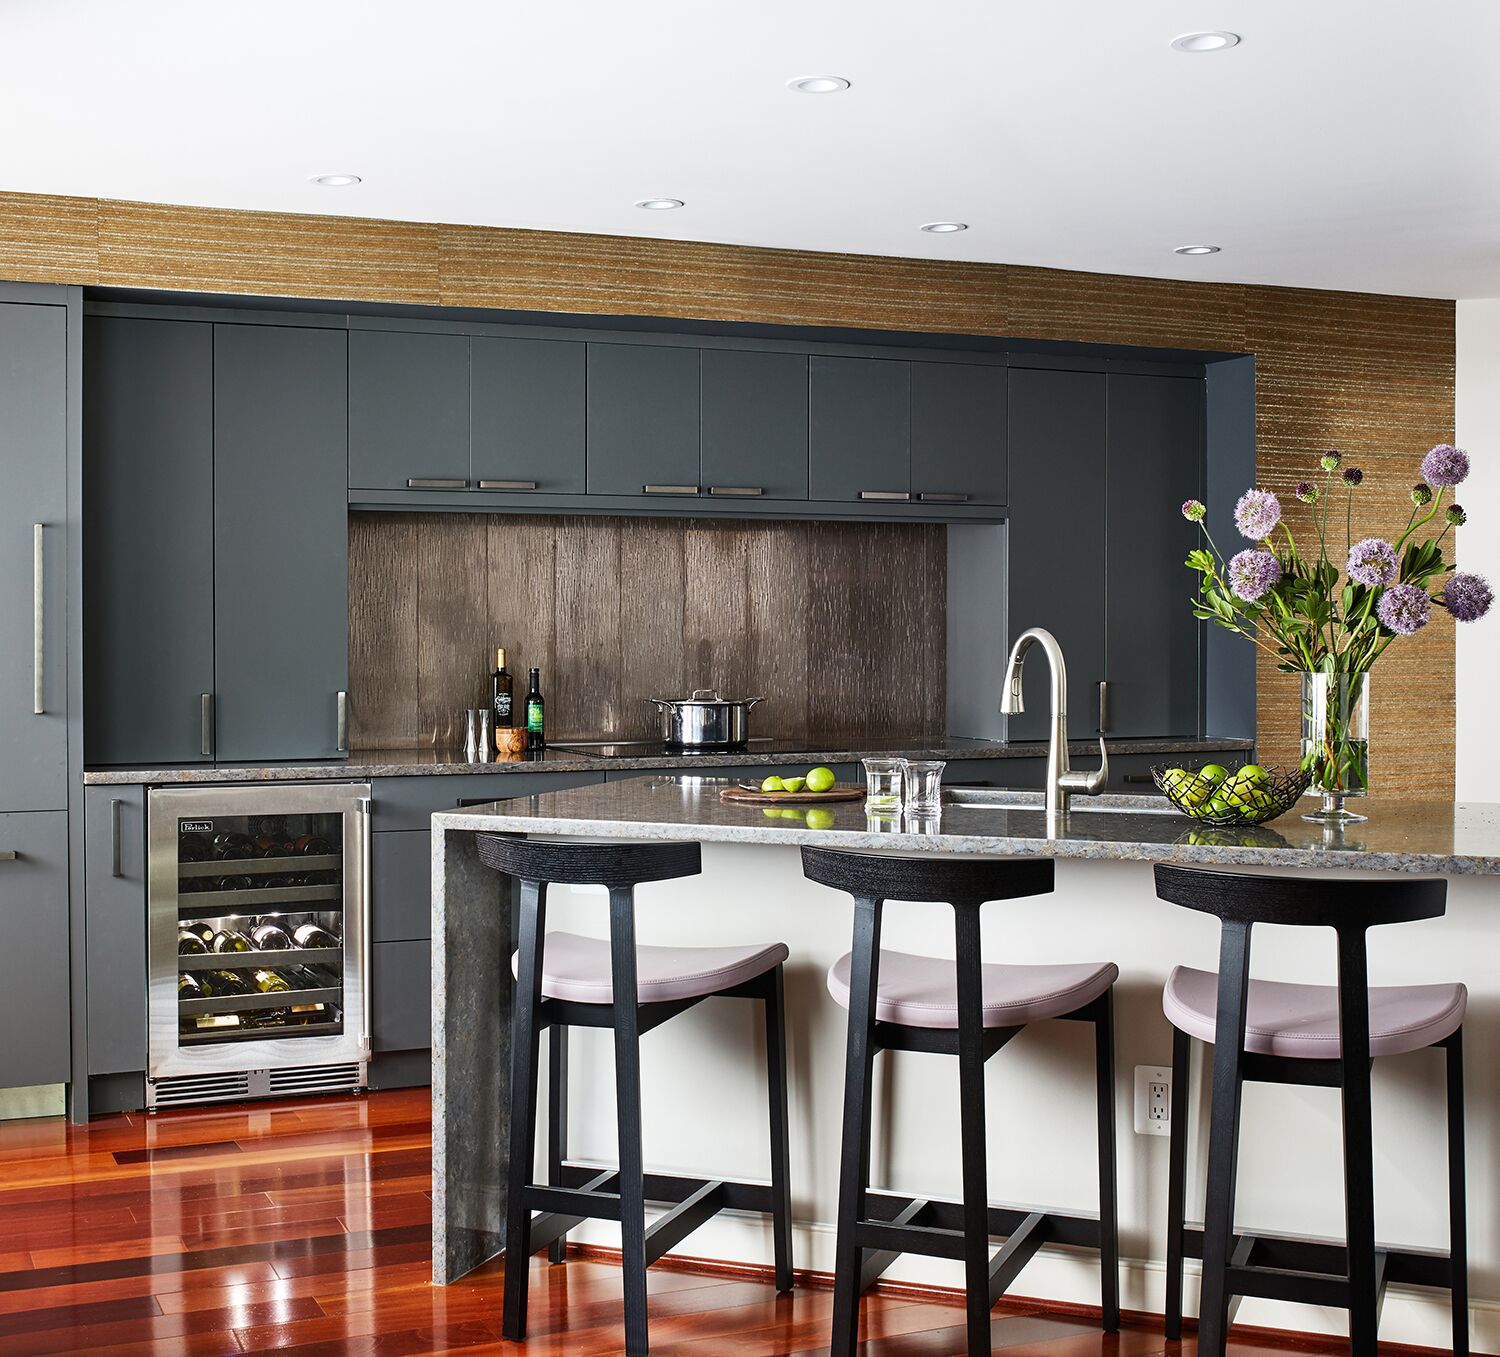 Kitchen interiors designed by Virginia's top designer Margery Wedderburn